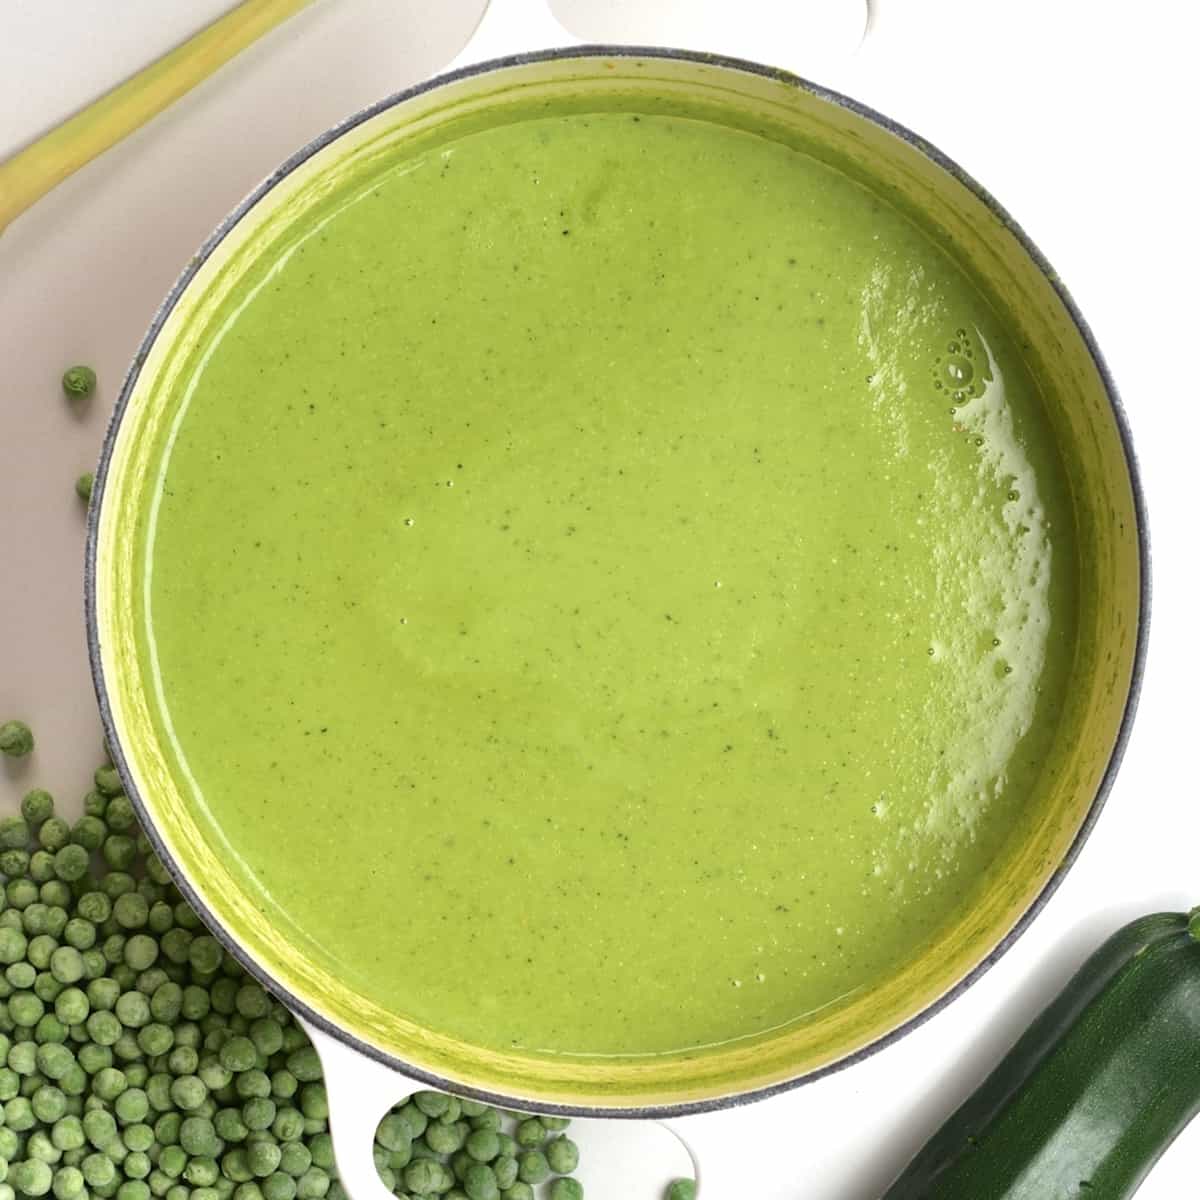 A saucepan wit homemade green pea soup